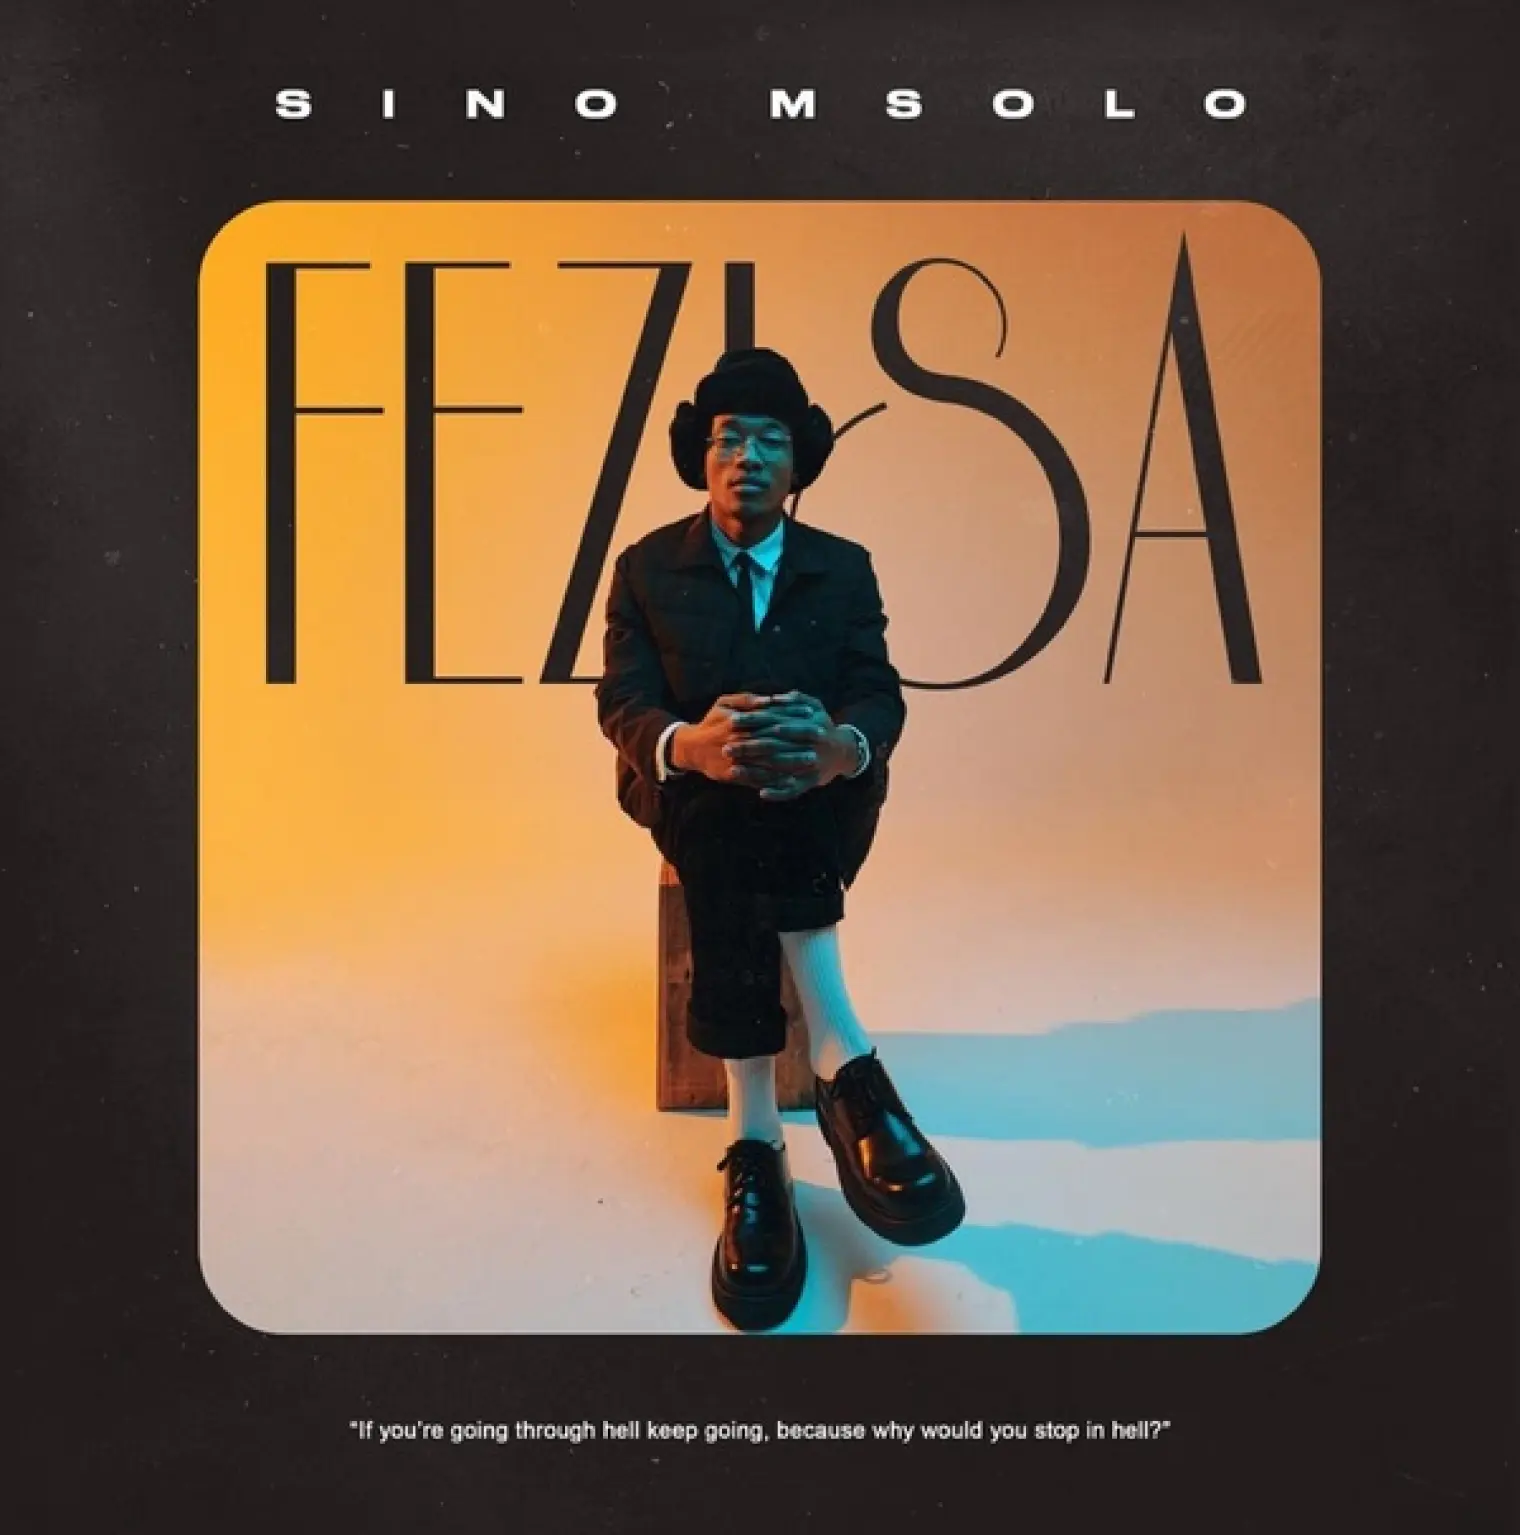 Fezisa -  Sino Msolo 